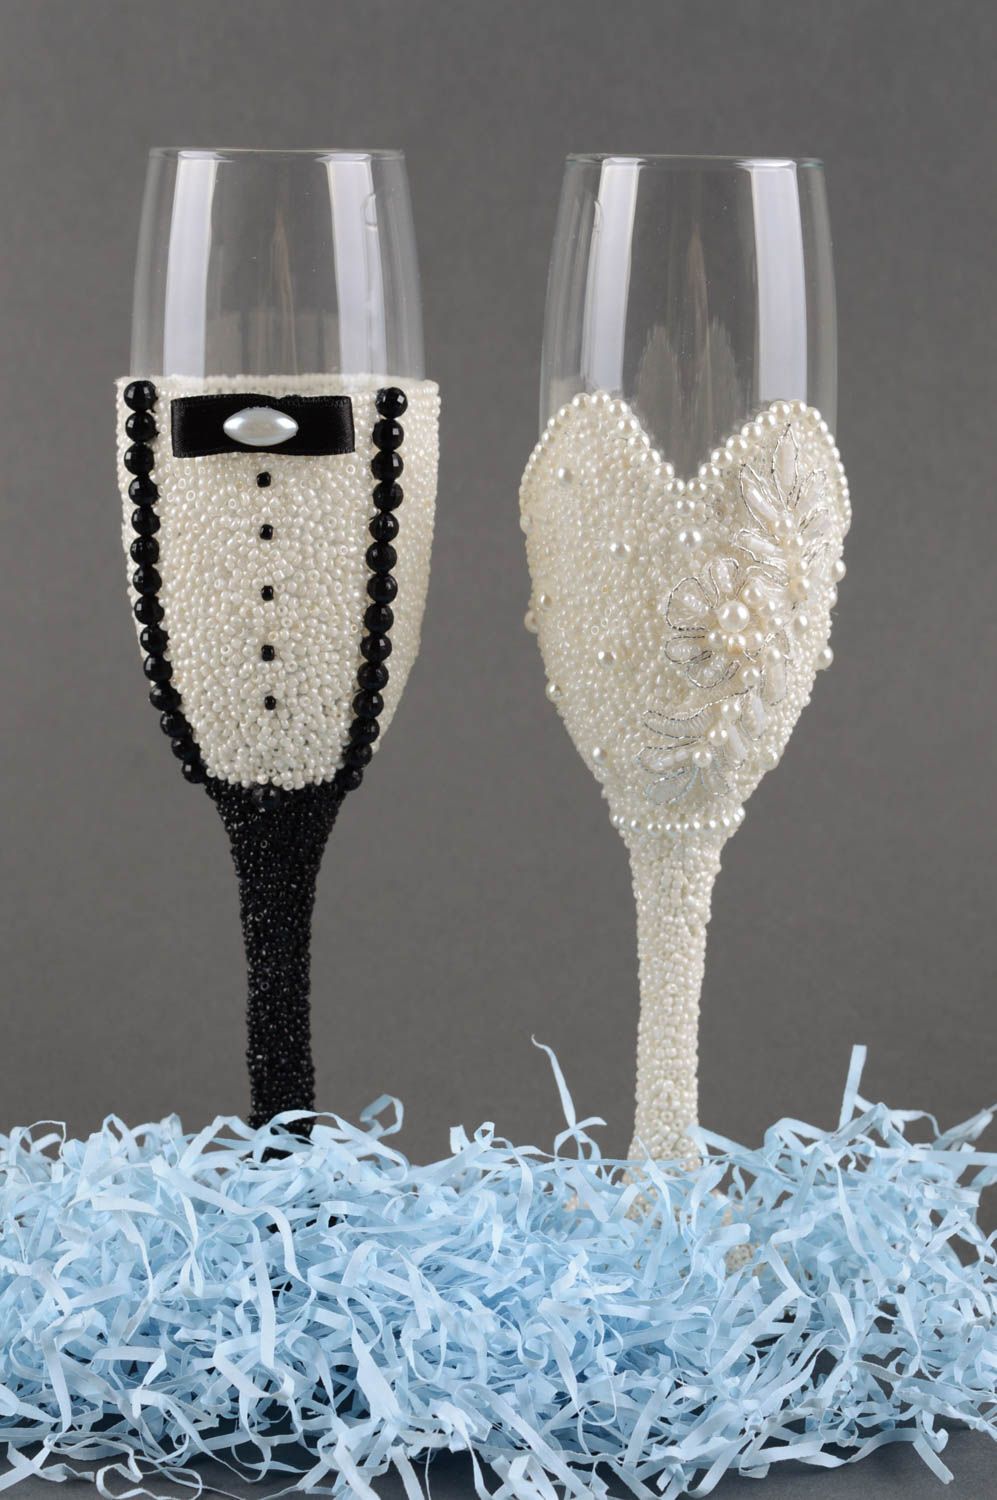 Handmade wedding glasses 2 pieces decorative glass ware wine glass gift ideas photo 1